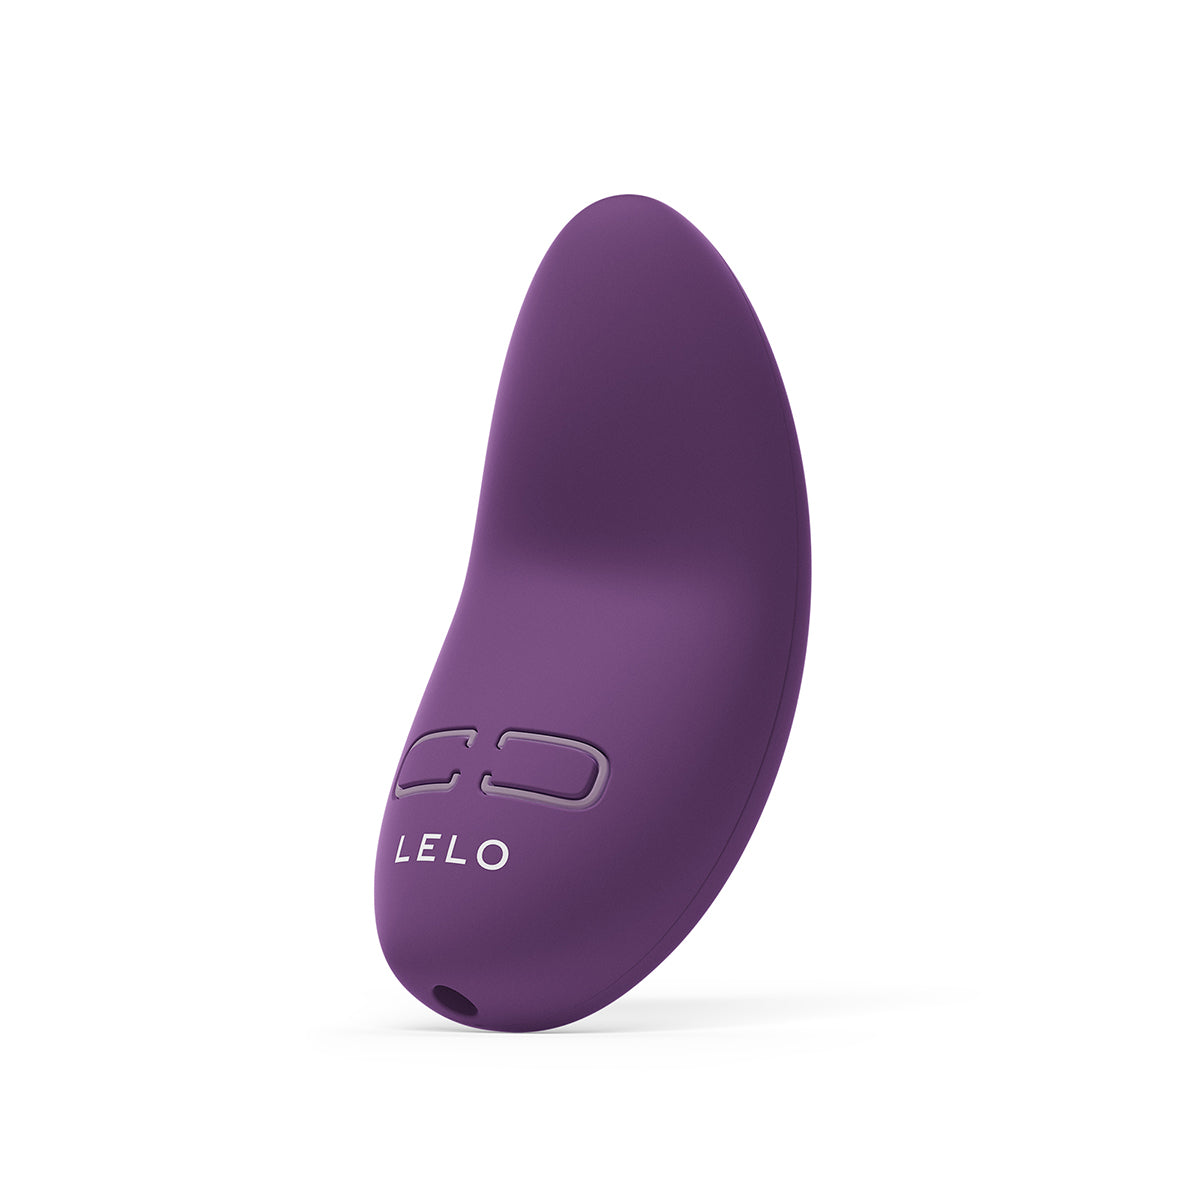 LELO Lily 3 Egg Vibrator - Ultimate Pleasure Dark Plum